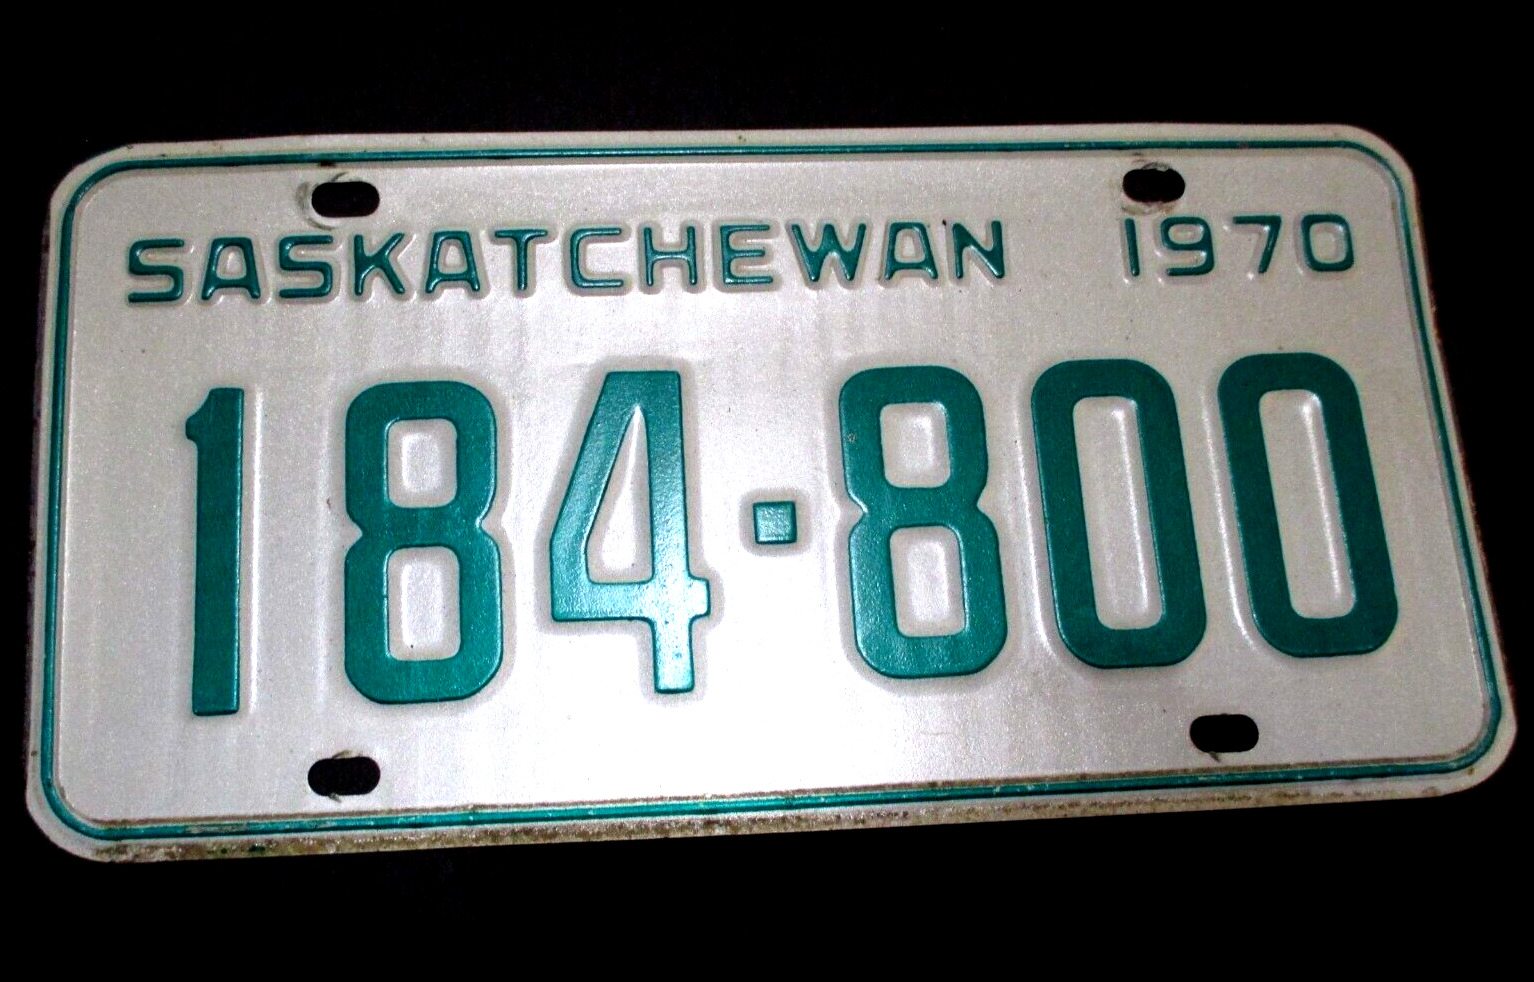 Saskatchewan Canada 1970 License Plate 184-800 in Great Condition